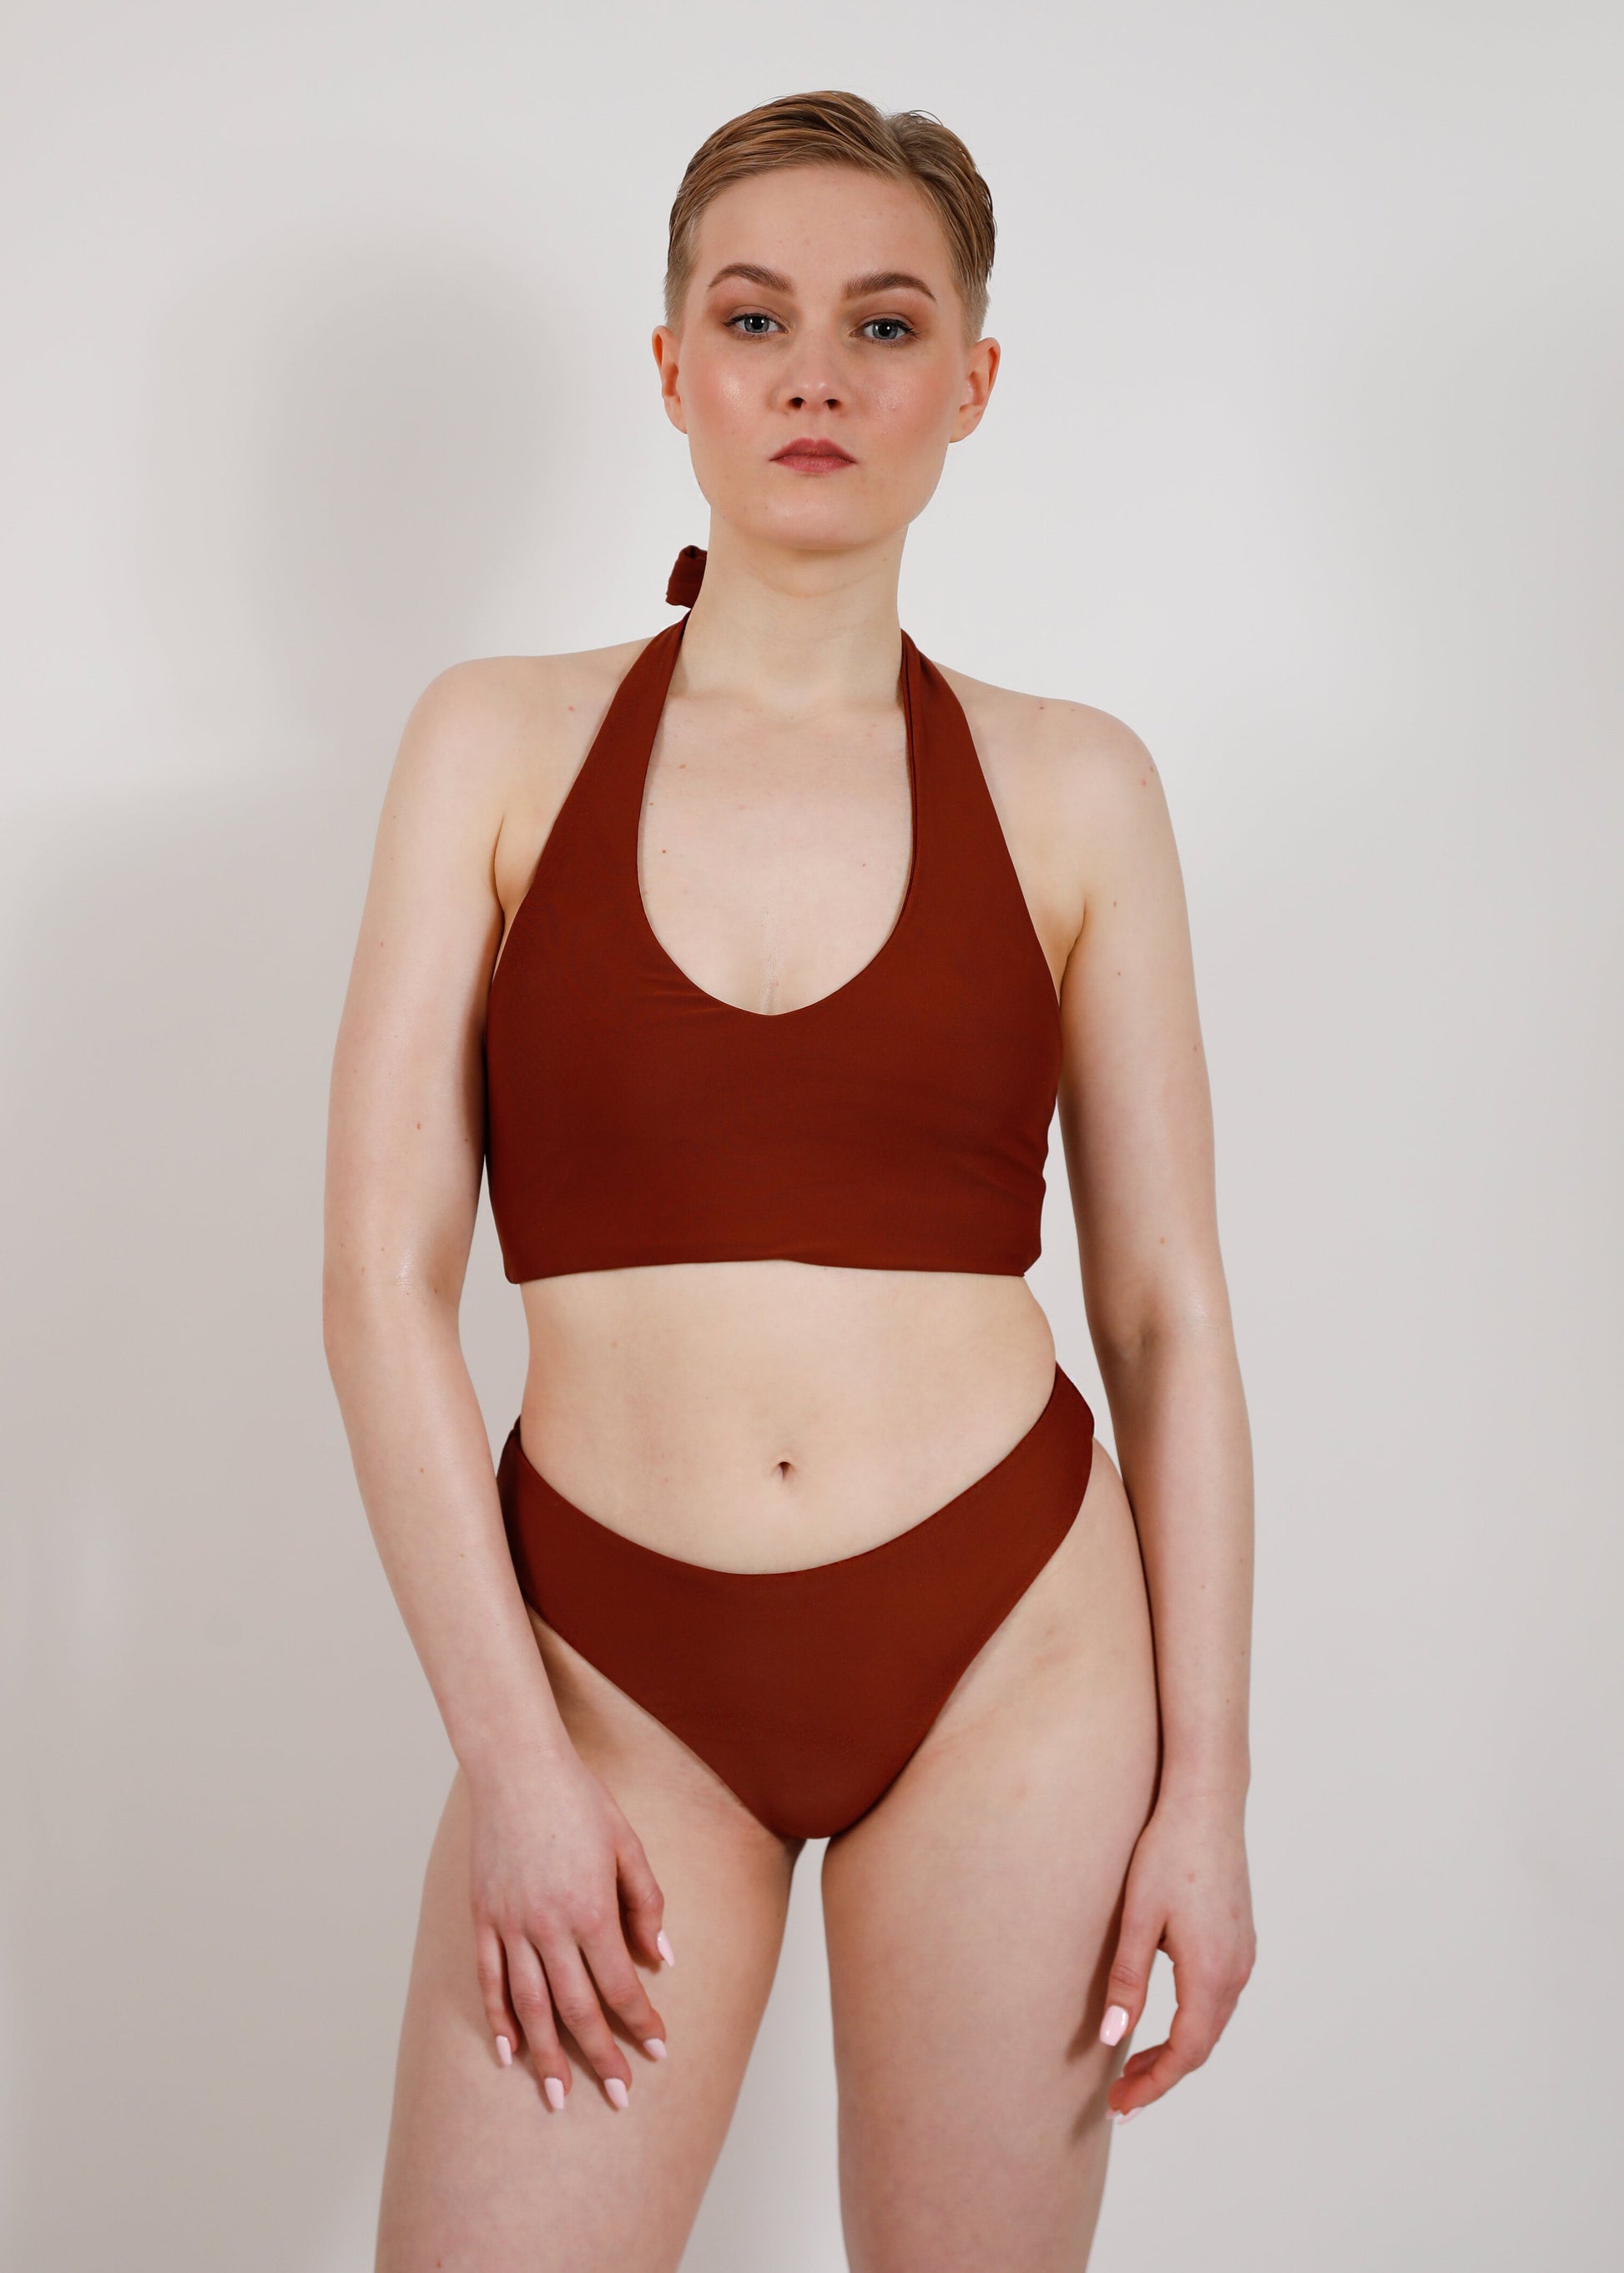 model with sustainable brown tieback bikini top